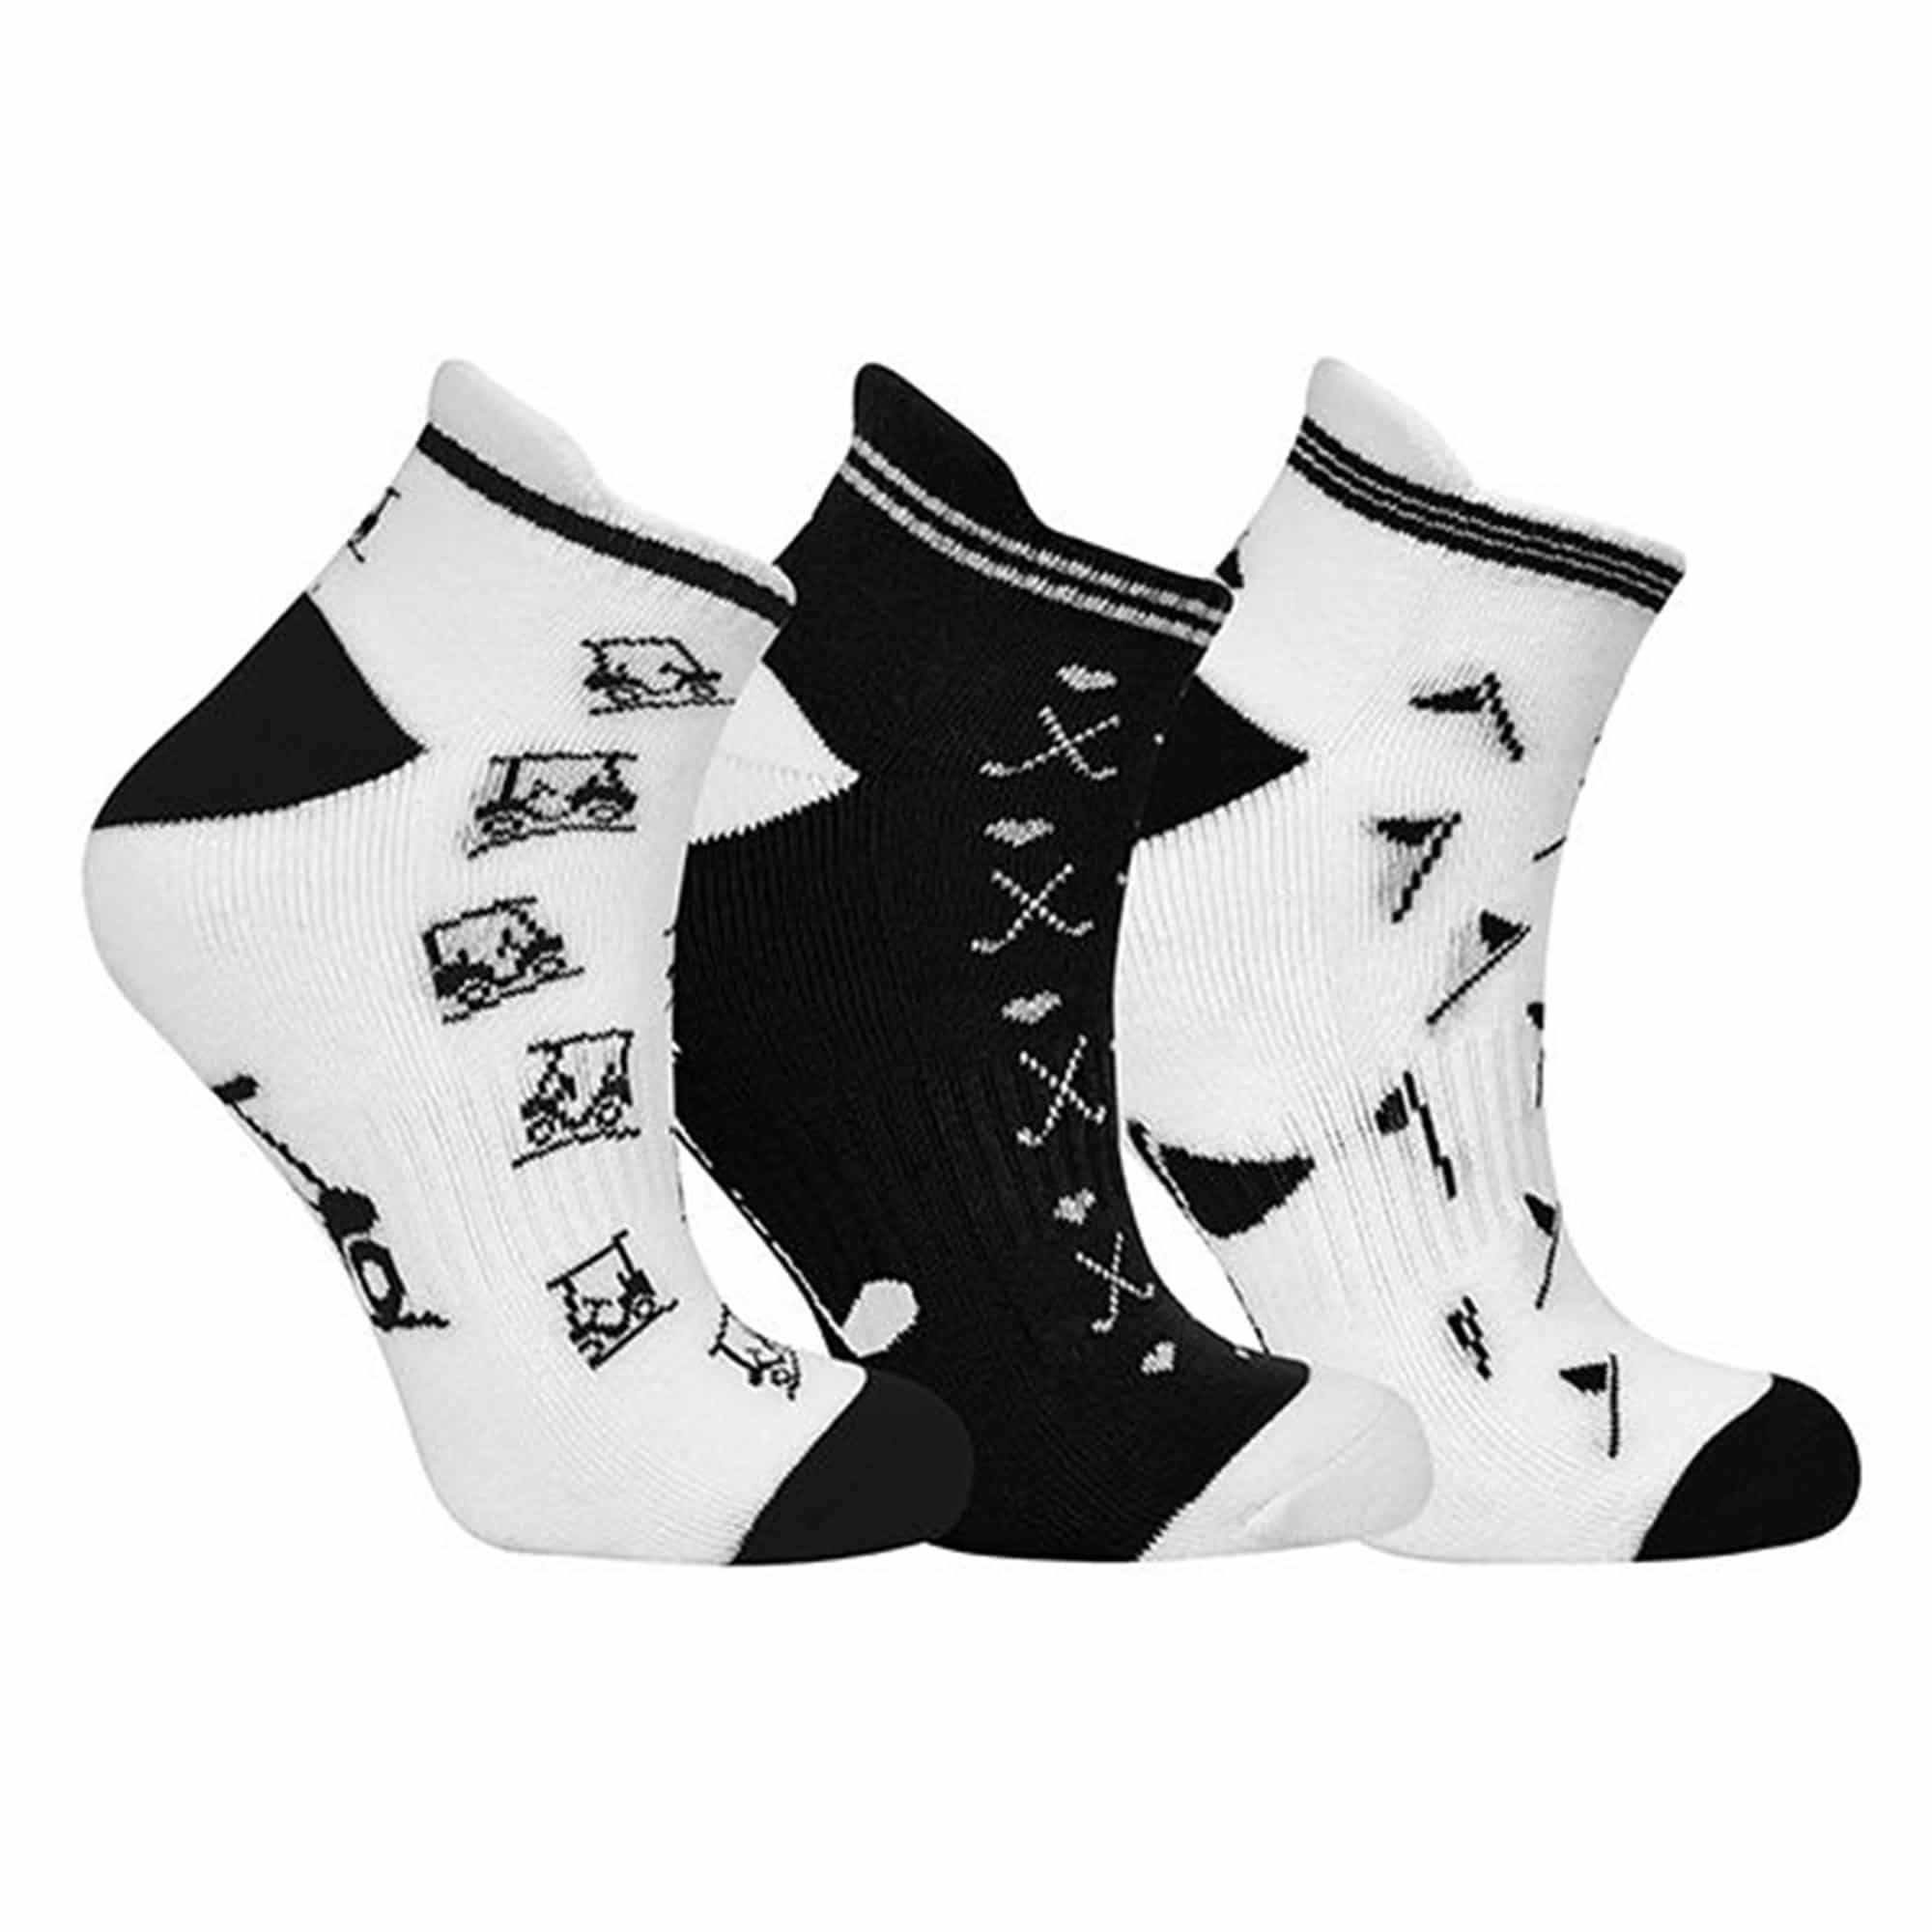 3 Pair Pack Black and White Patterned Ladies Golf Socks